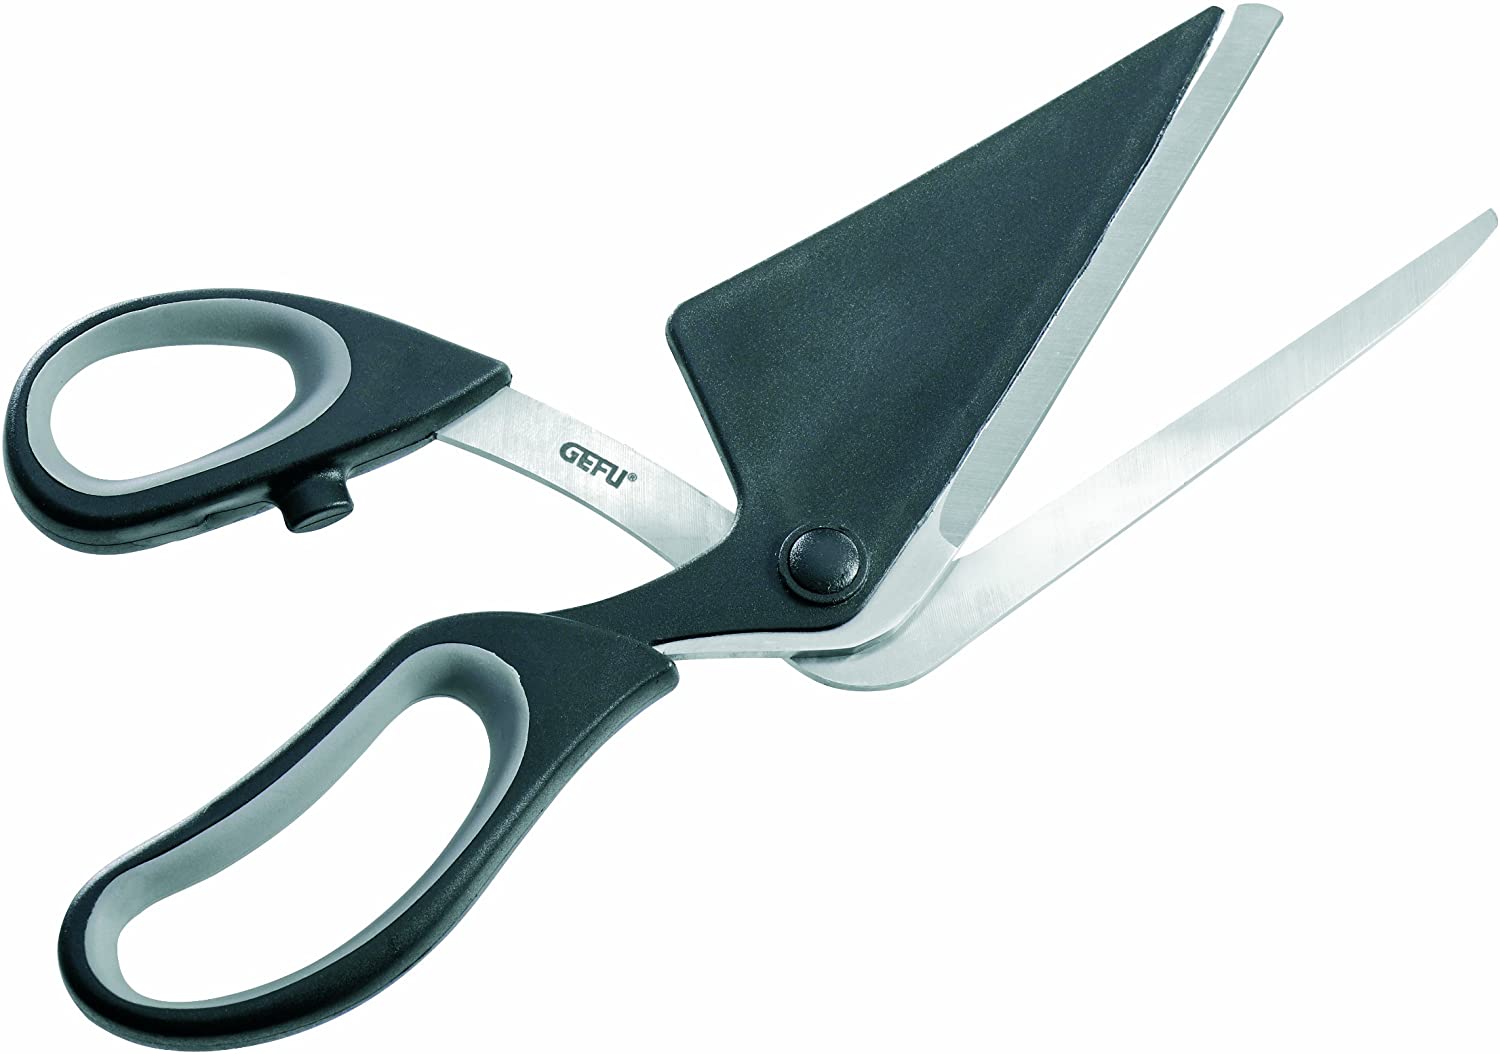 Gefu 89069 Pizza Scissors – Serving Scissors – Stainless Steel/Plastic